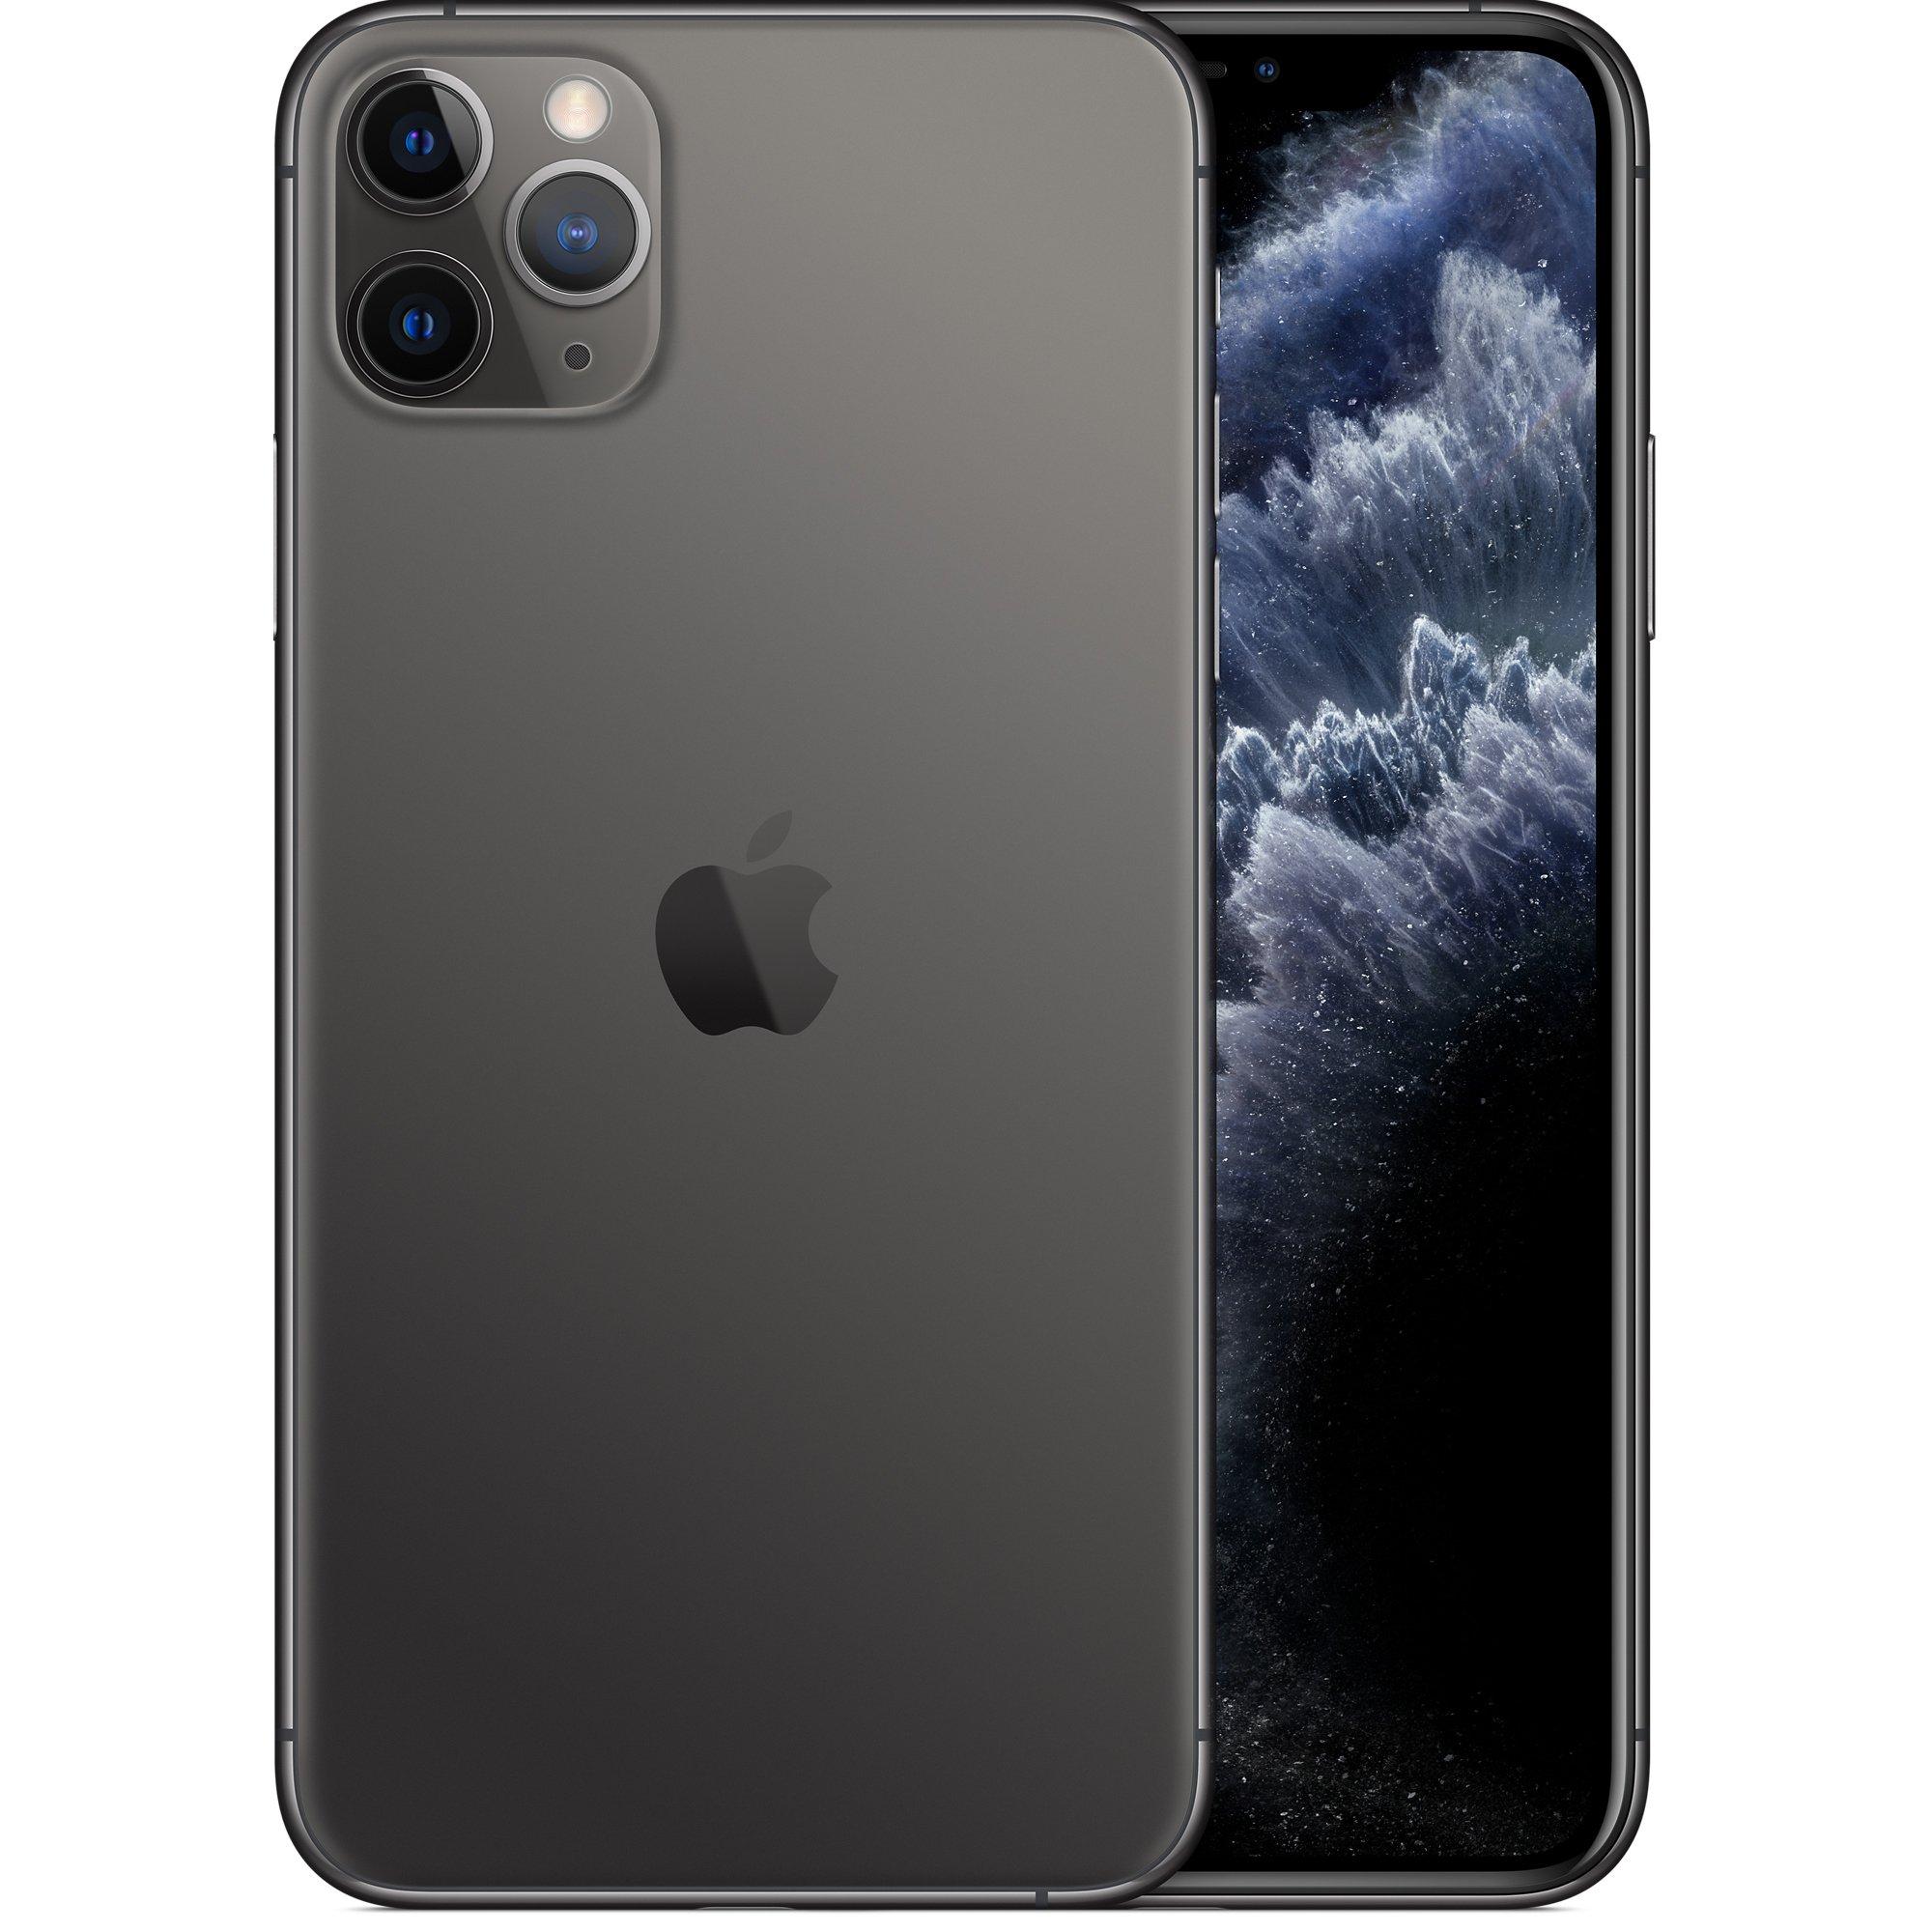 apple iphone 11 pro max 64gb smartphone - space gray - unlocked - certified refurbished best buy canada on iphone 11 pro max 64gb unlocked best buy